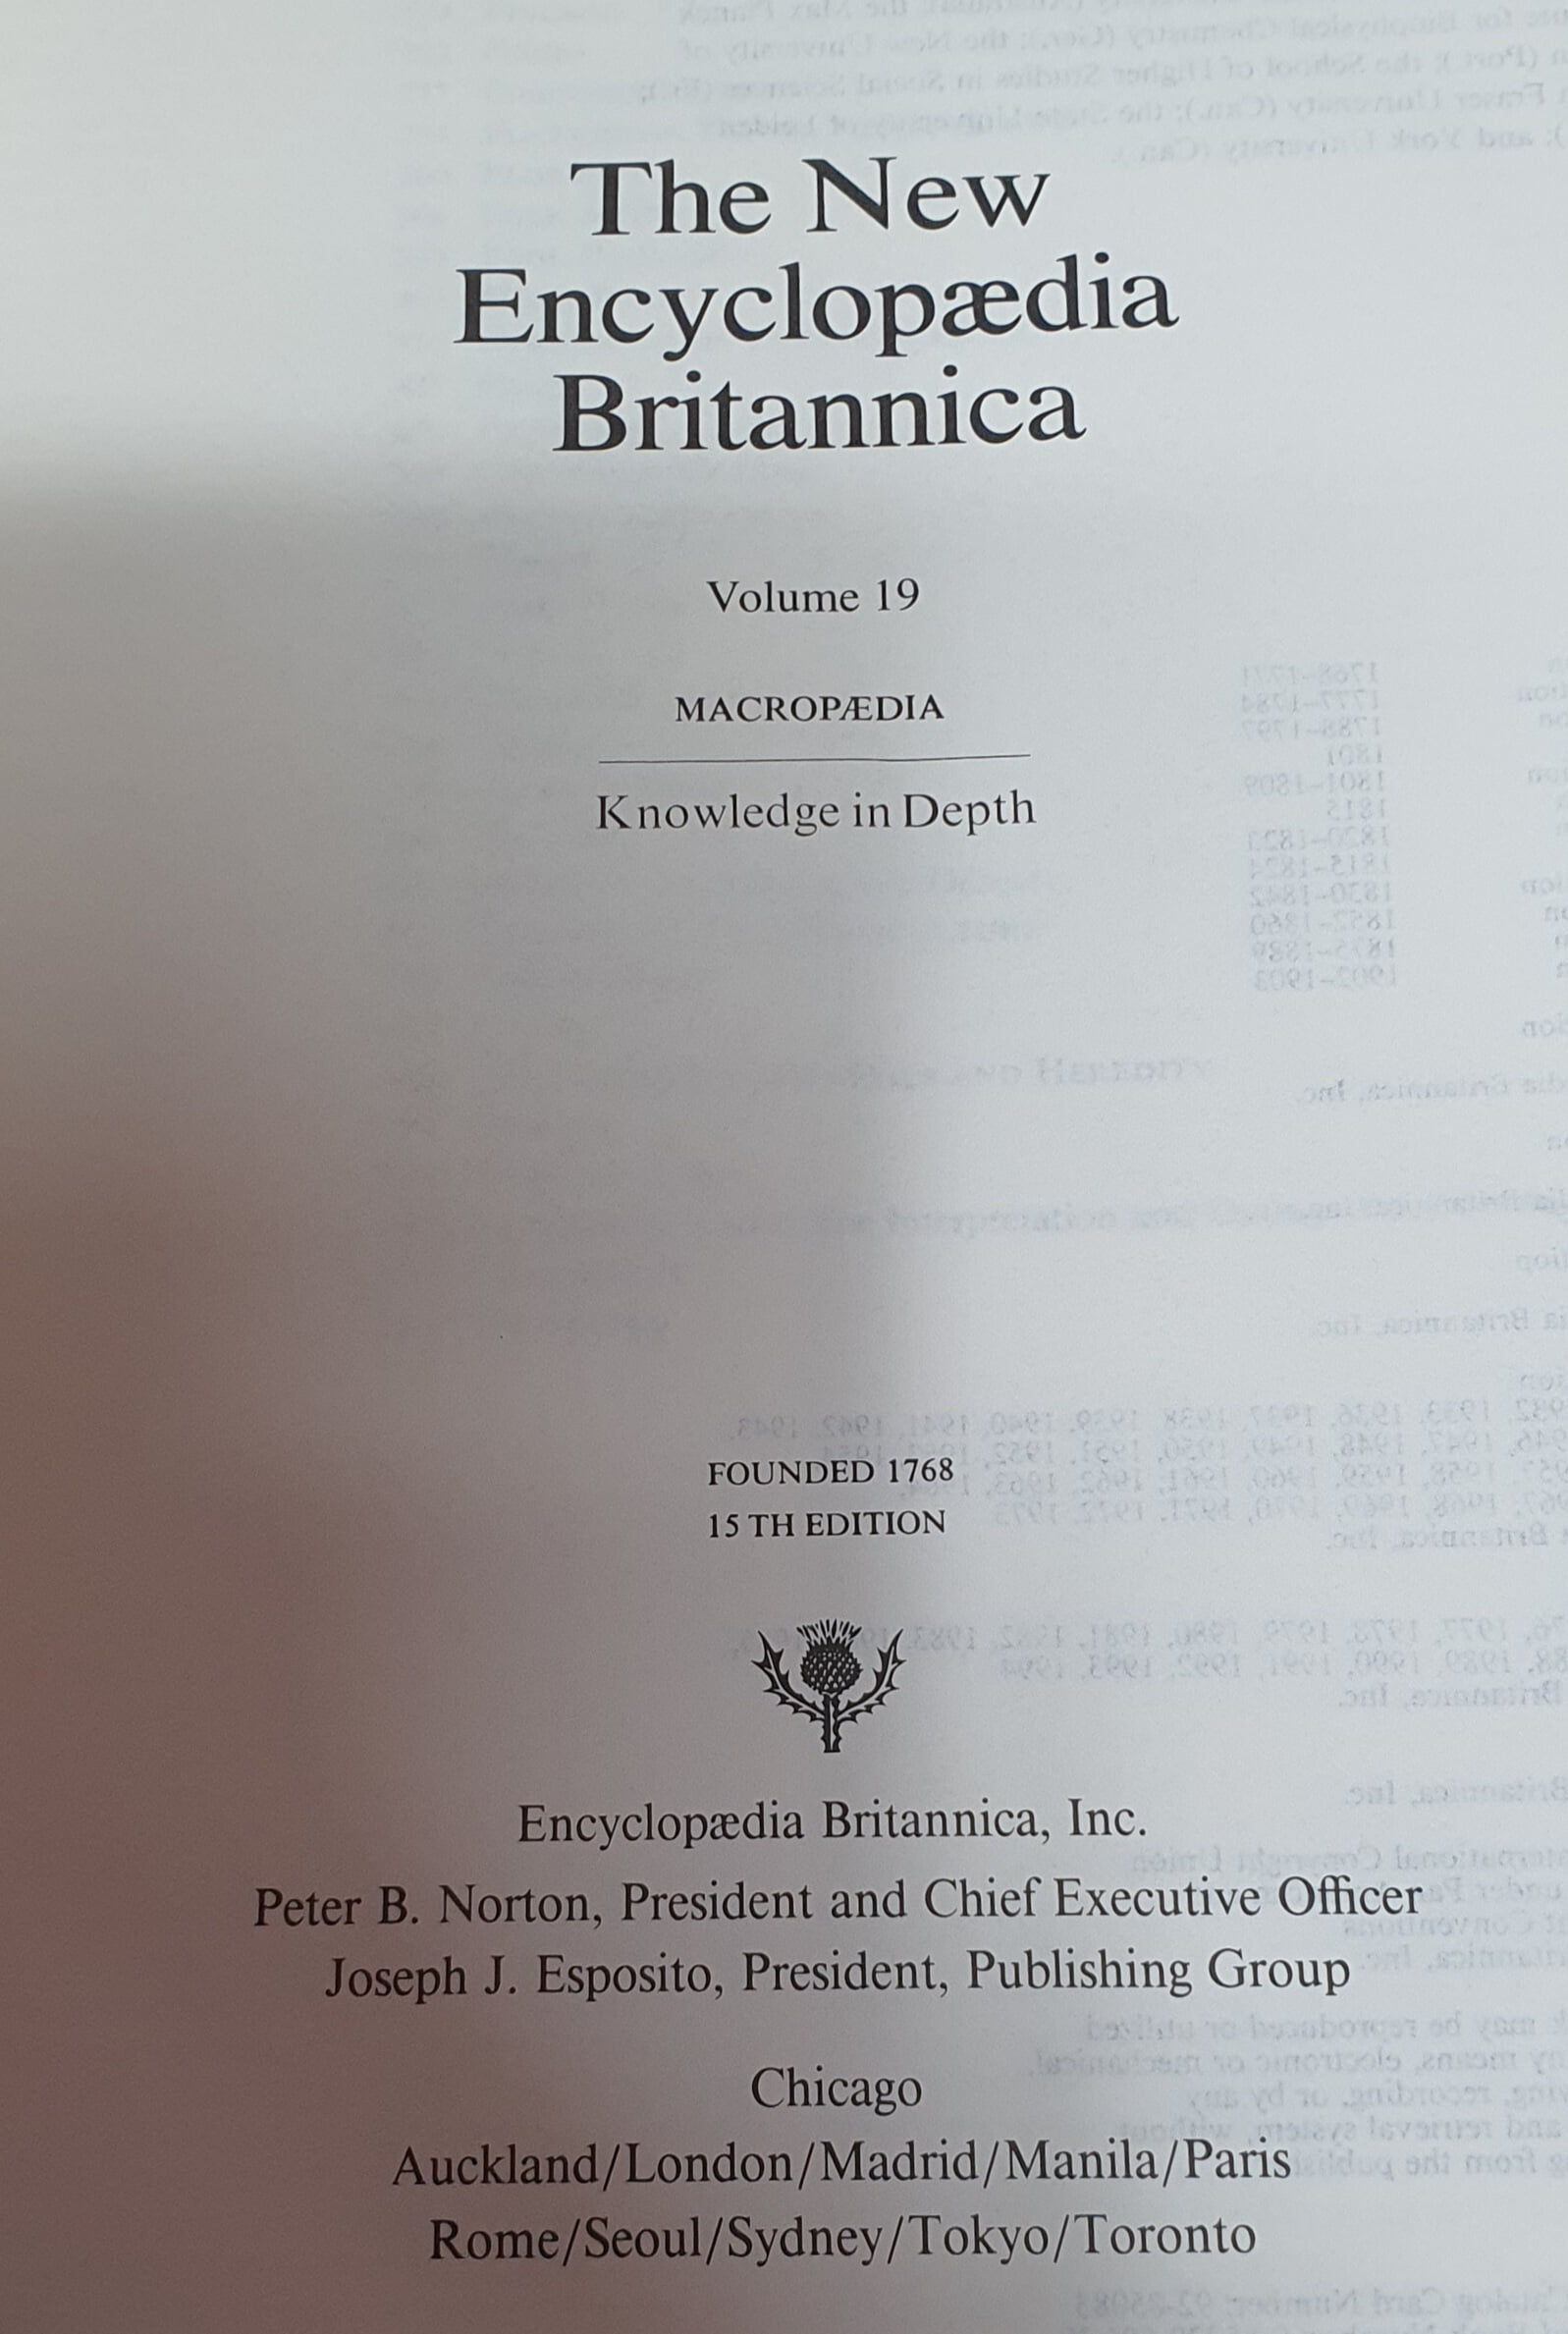 The New Encyclopaedia Britannica-특장판, 금박, 가죽 (본책27+부록3=30권)-14번,15번 없음